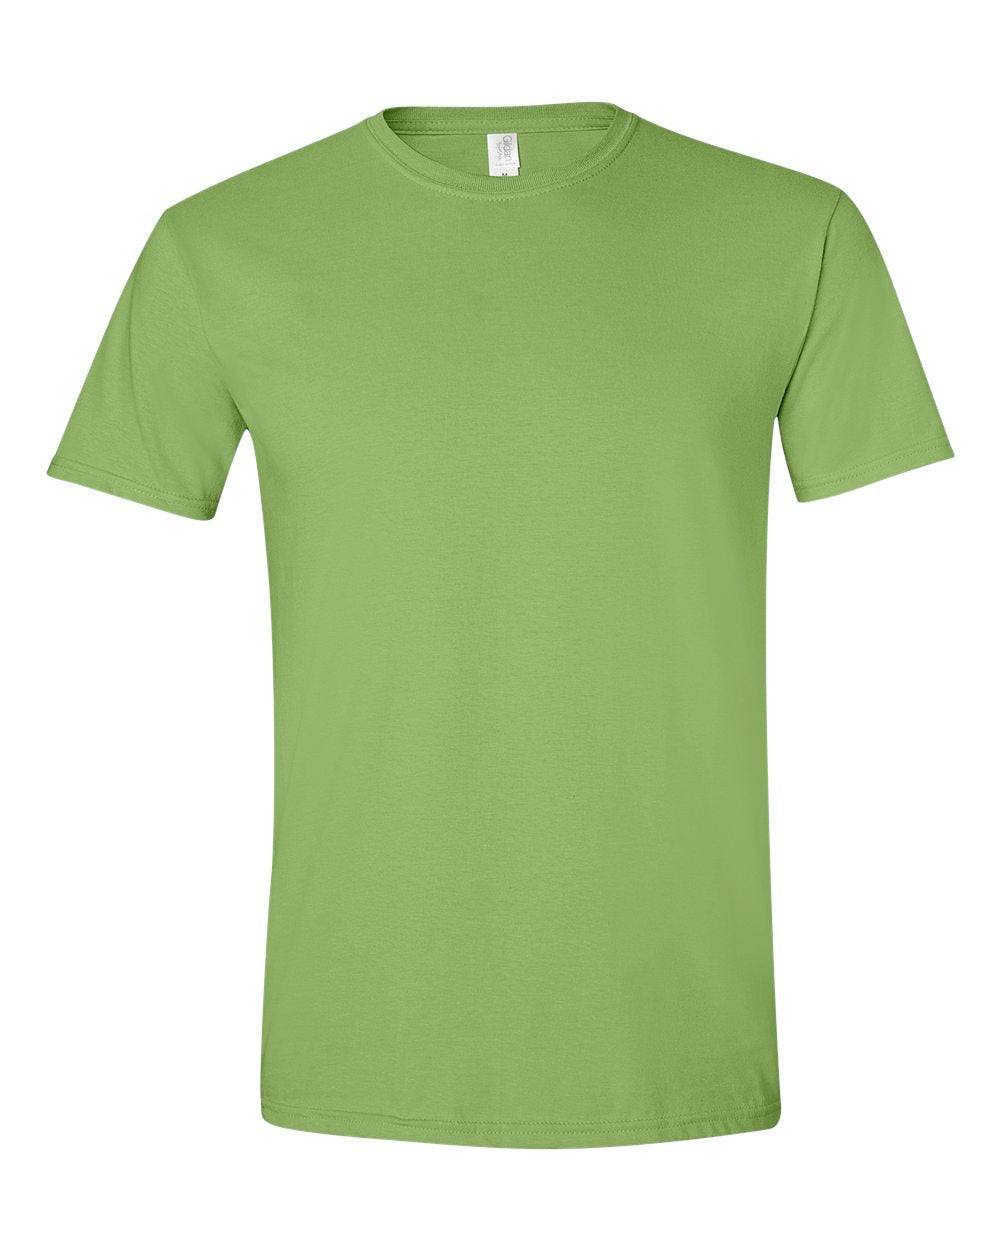 LAX Gildan Soft Style T-Shirt